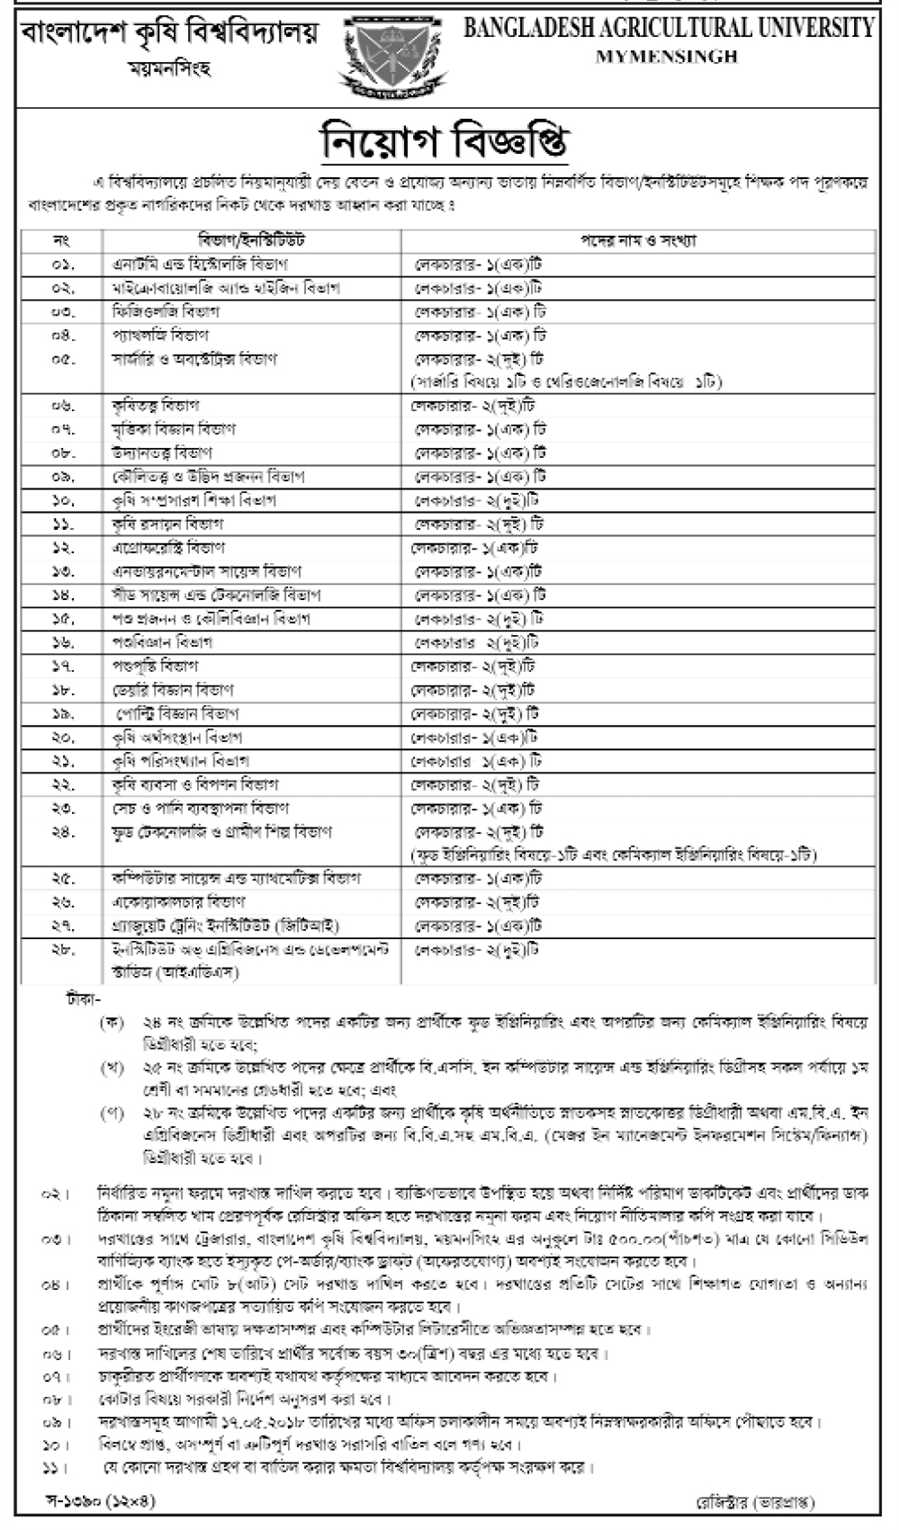 Bangladesh Agricultural University (BAU) Job Circular 2018